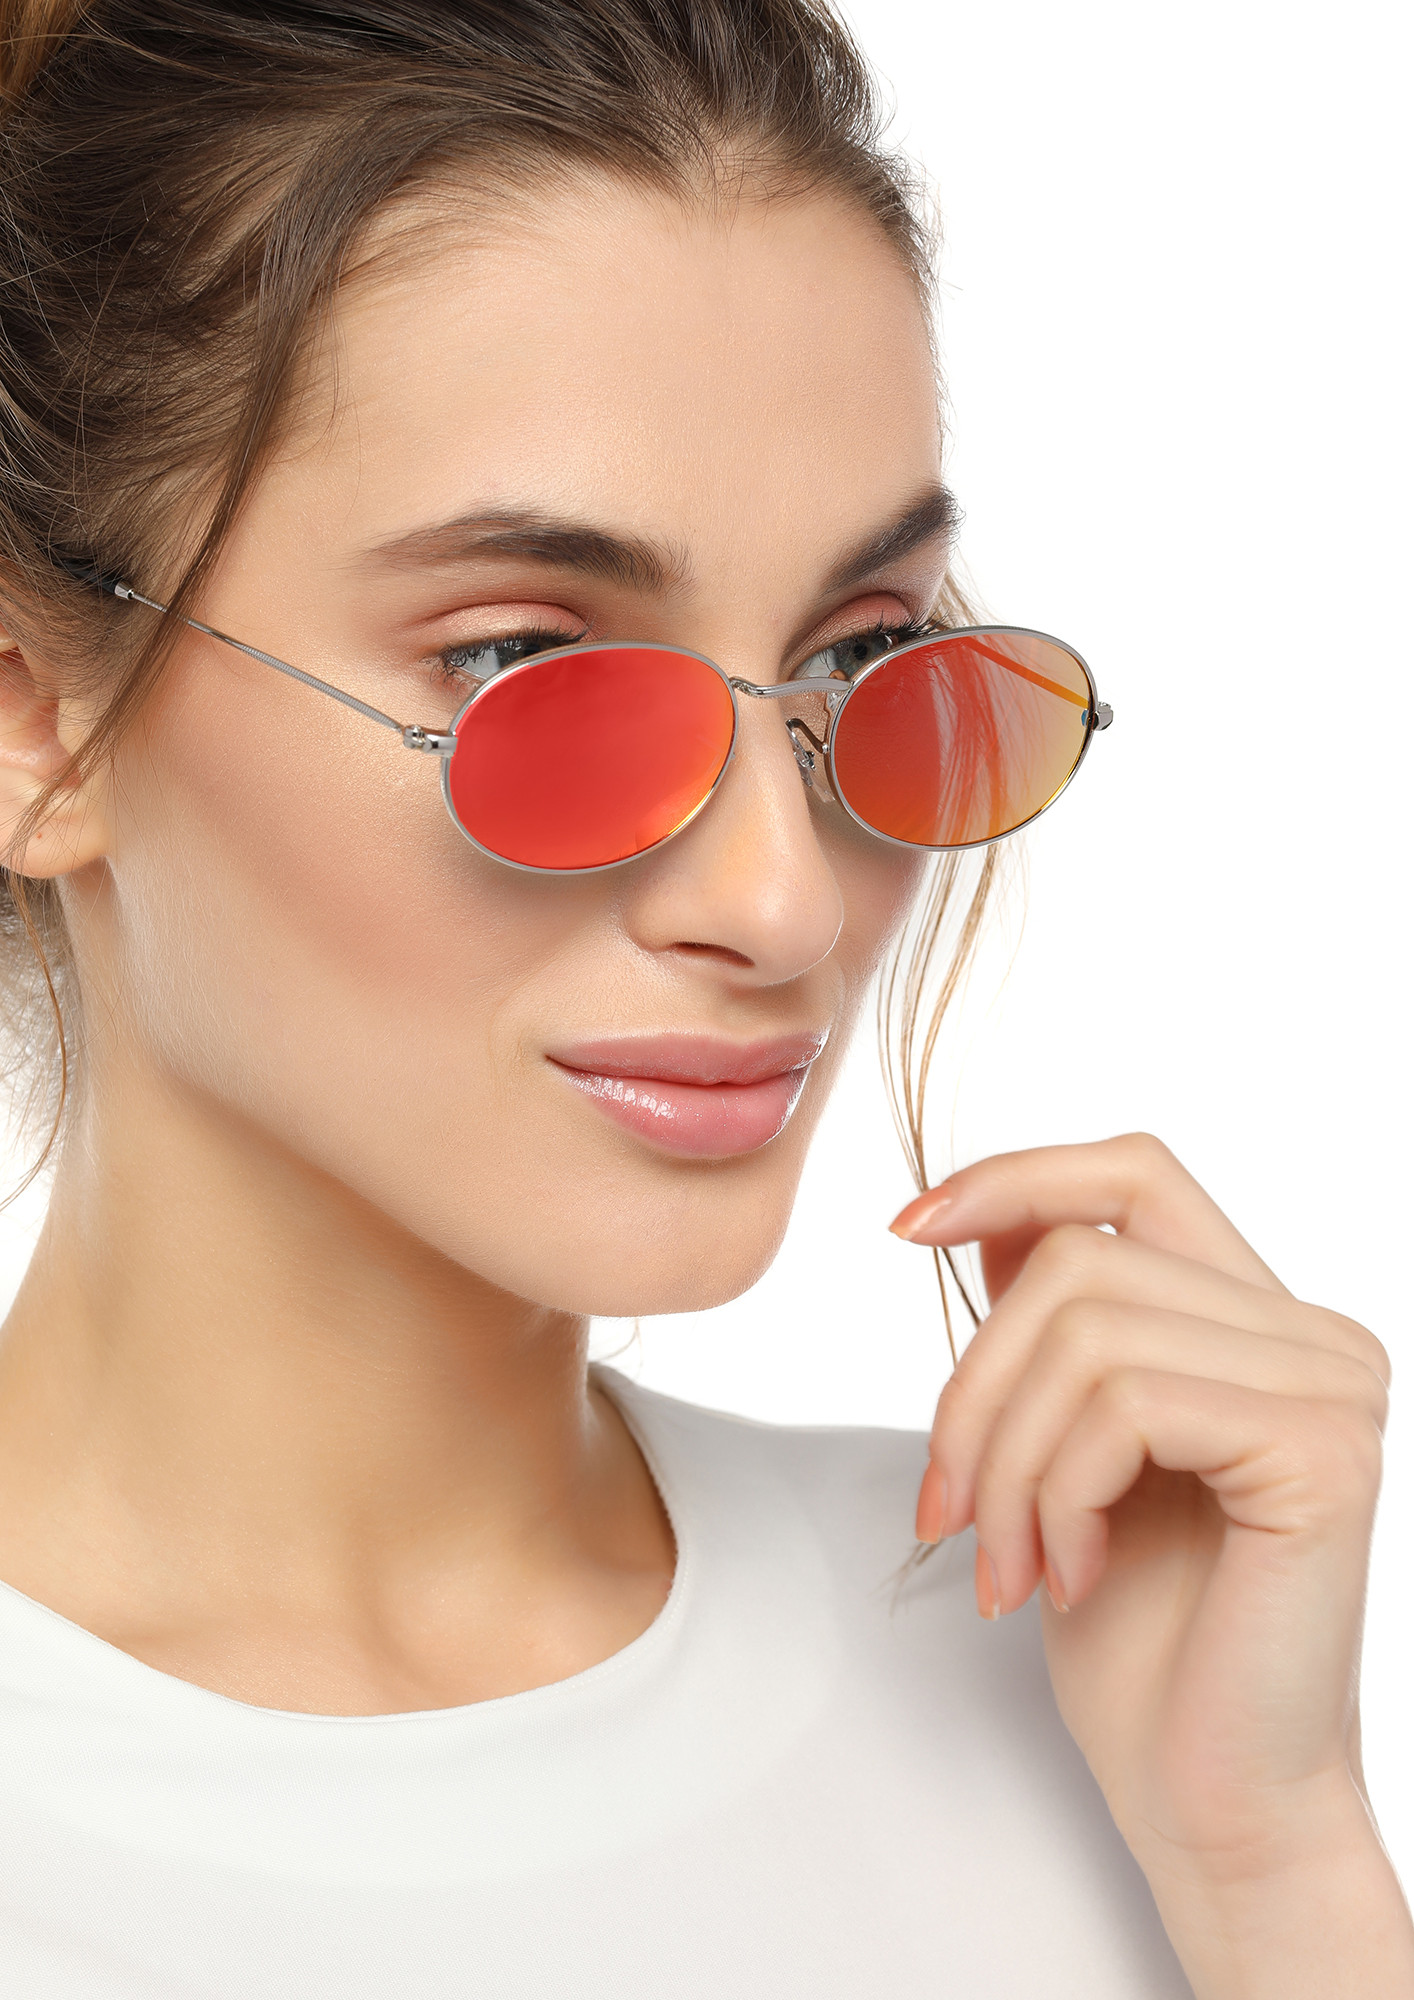 Buy FY LANE MC stan Candy White and Black Rectangle Retro Vintage Sunglasses  Women and Men Small Narrow Square Sun Glasses UV Protection Glasses -  4I-R44Q-L44V at Amazon.in